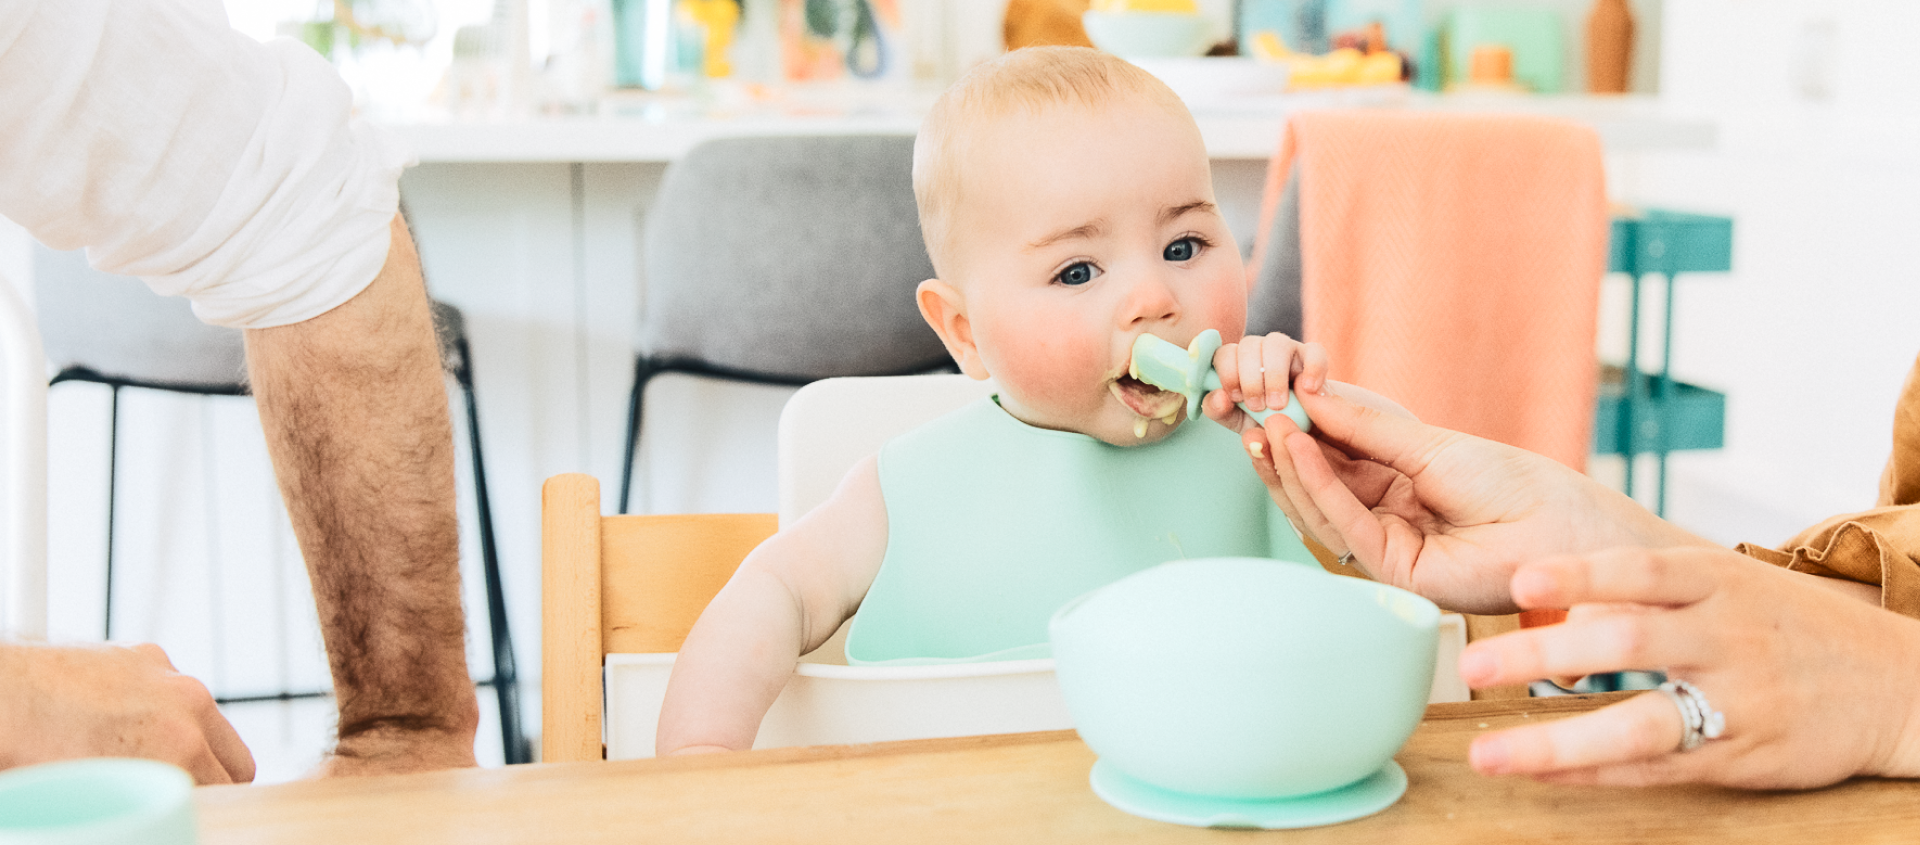 Silicone Feeding Tools for Baby - Joyfull 